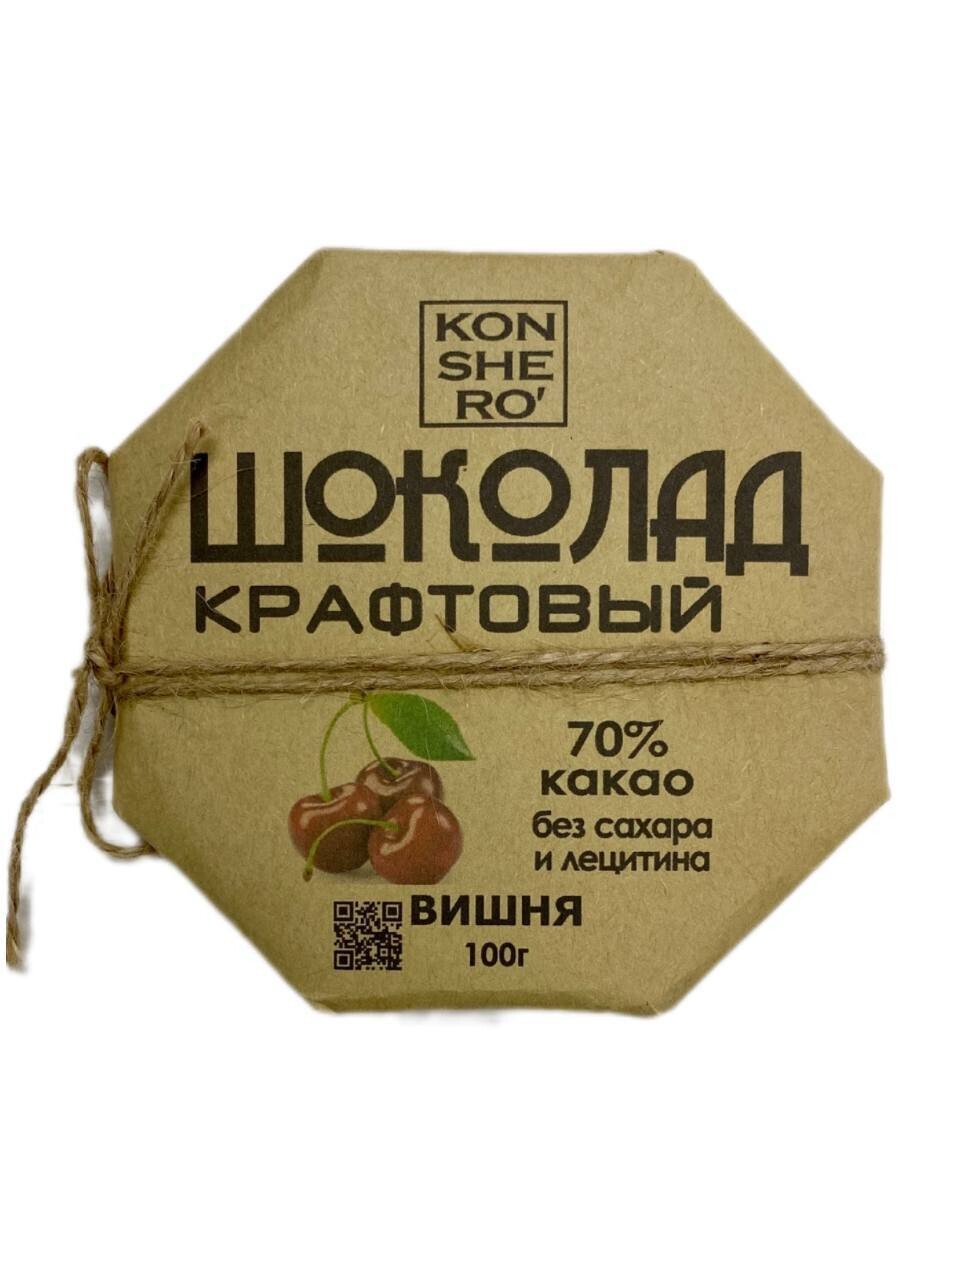 Шоколад на меду с вишней, KONSHERO, 100 г